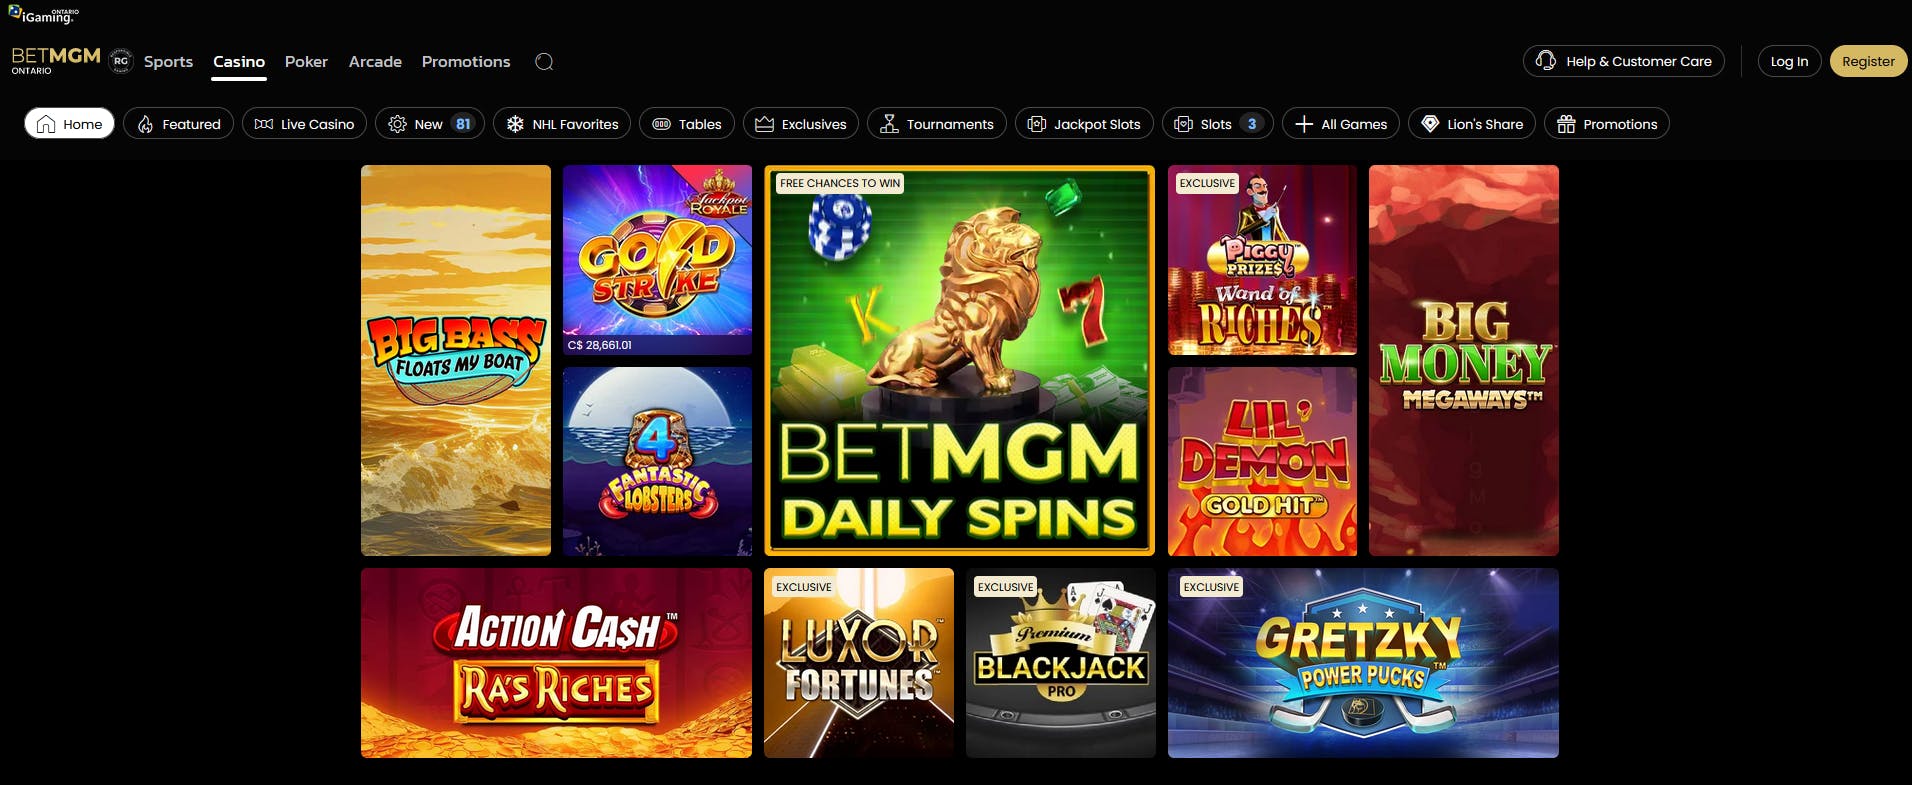 betmgm ontario casino games selection